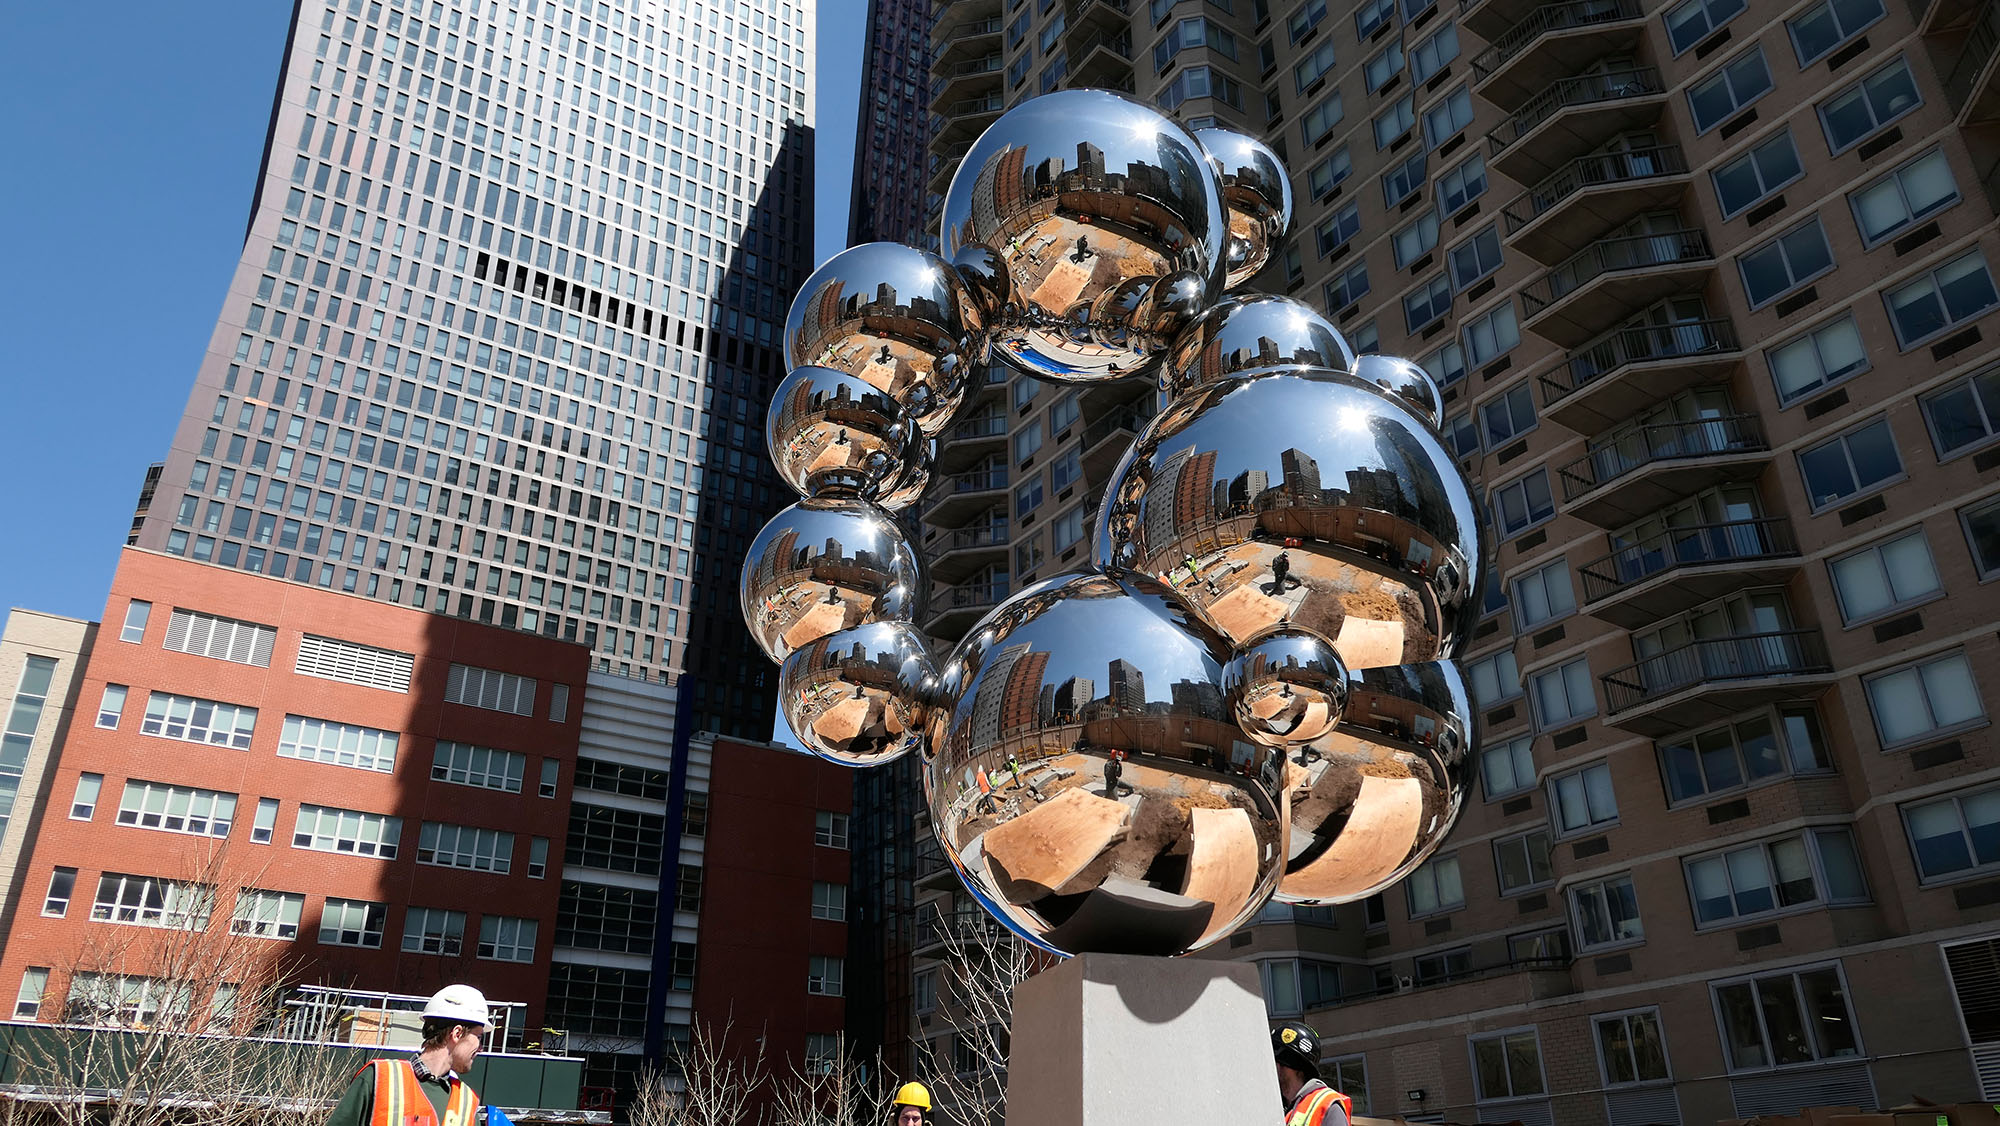 david_fried_artist_permanent_public_sculpture_NYC_New_York_2019